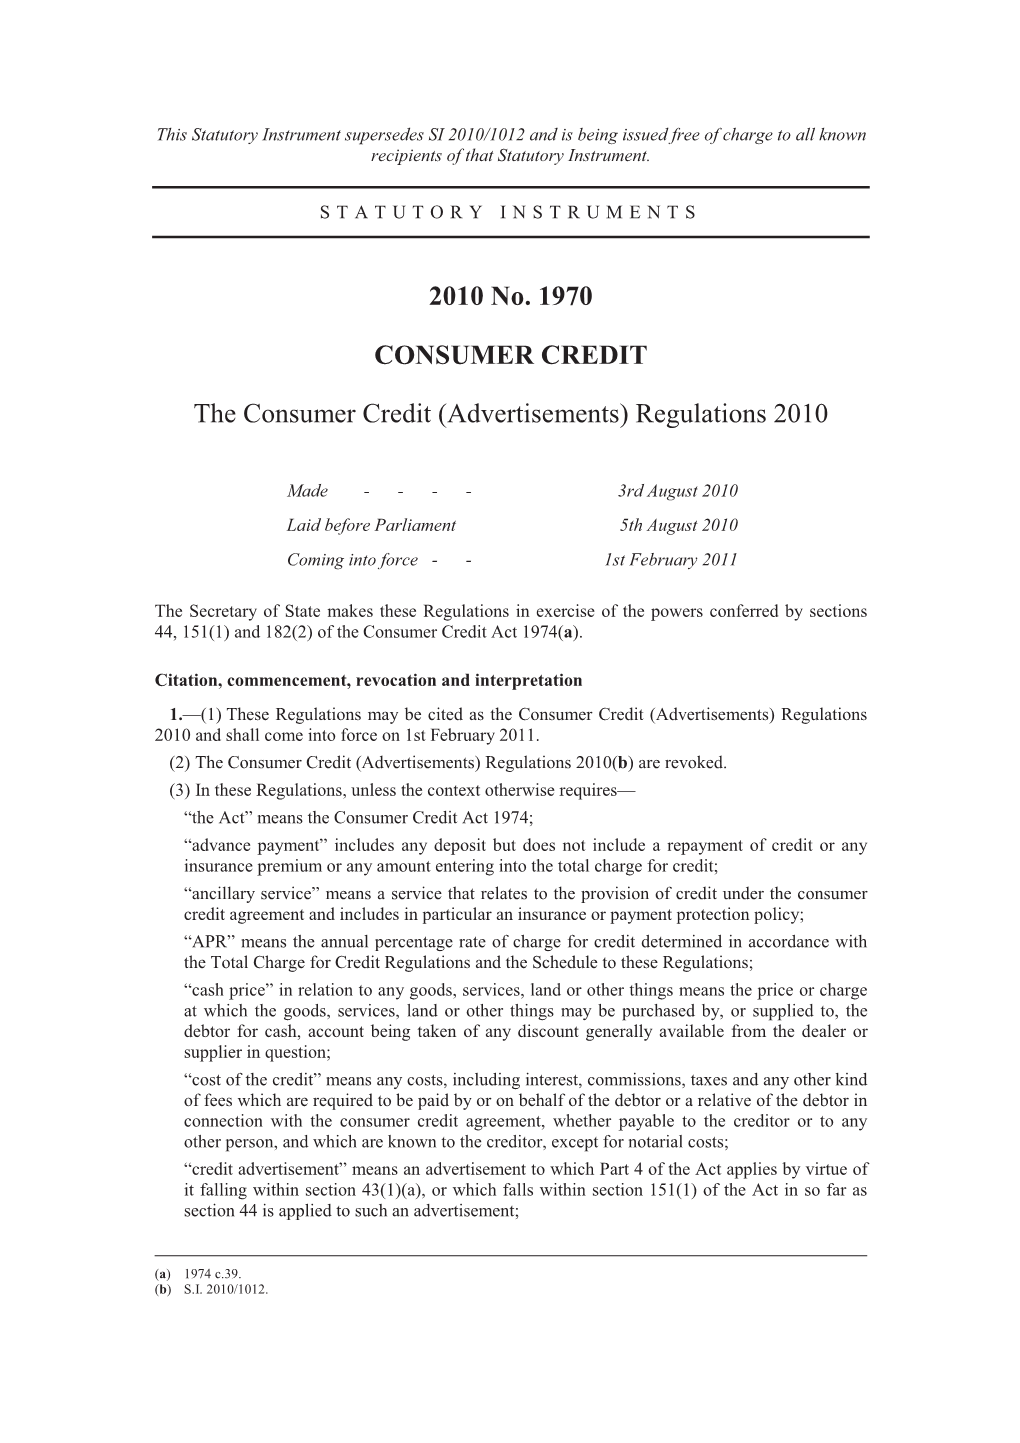 2010 No. 1970 CONSUMER CREDIT the Consumer Credit (Advertisements) Regulations 2010